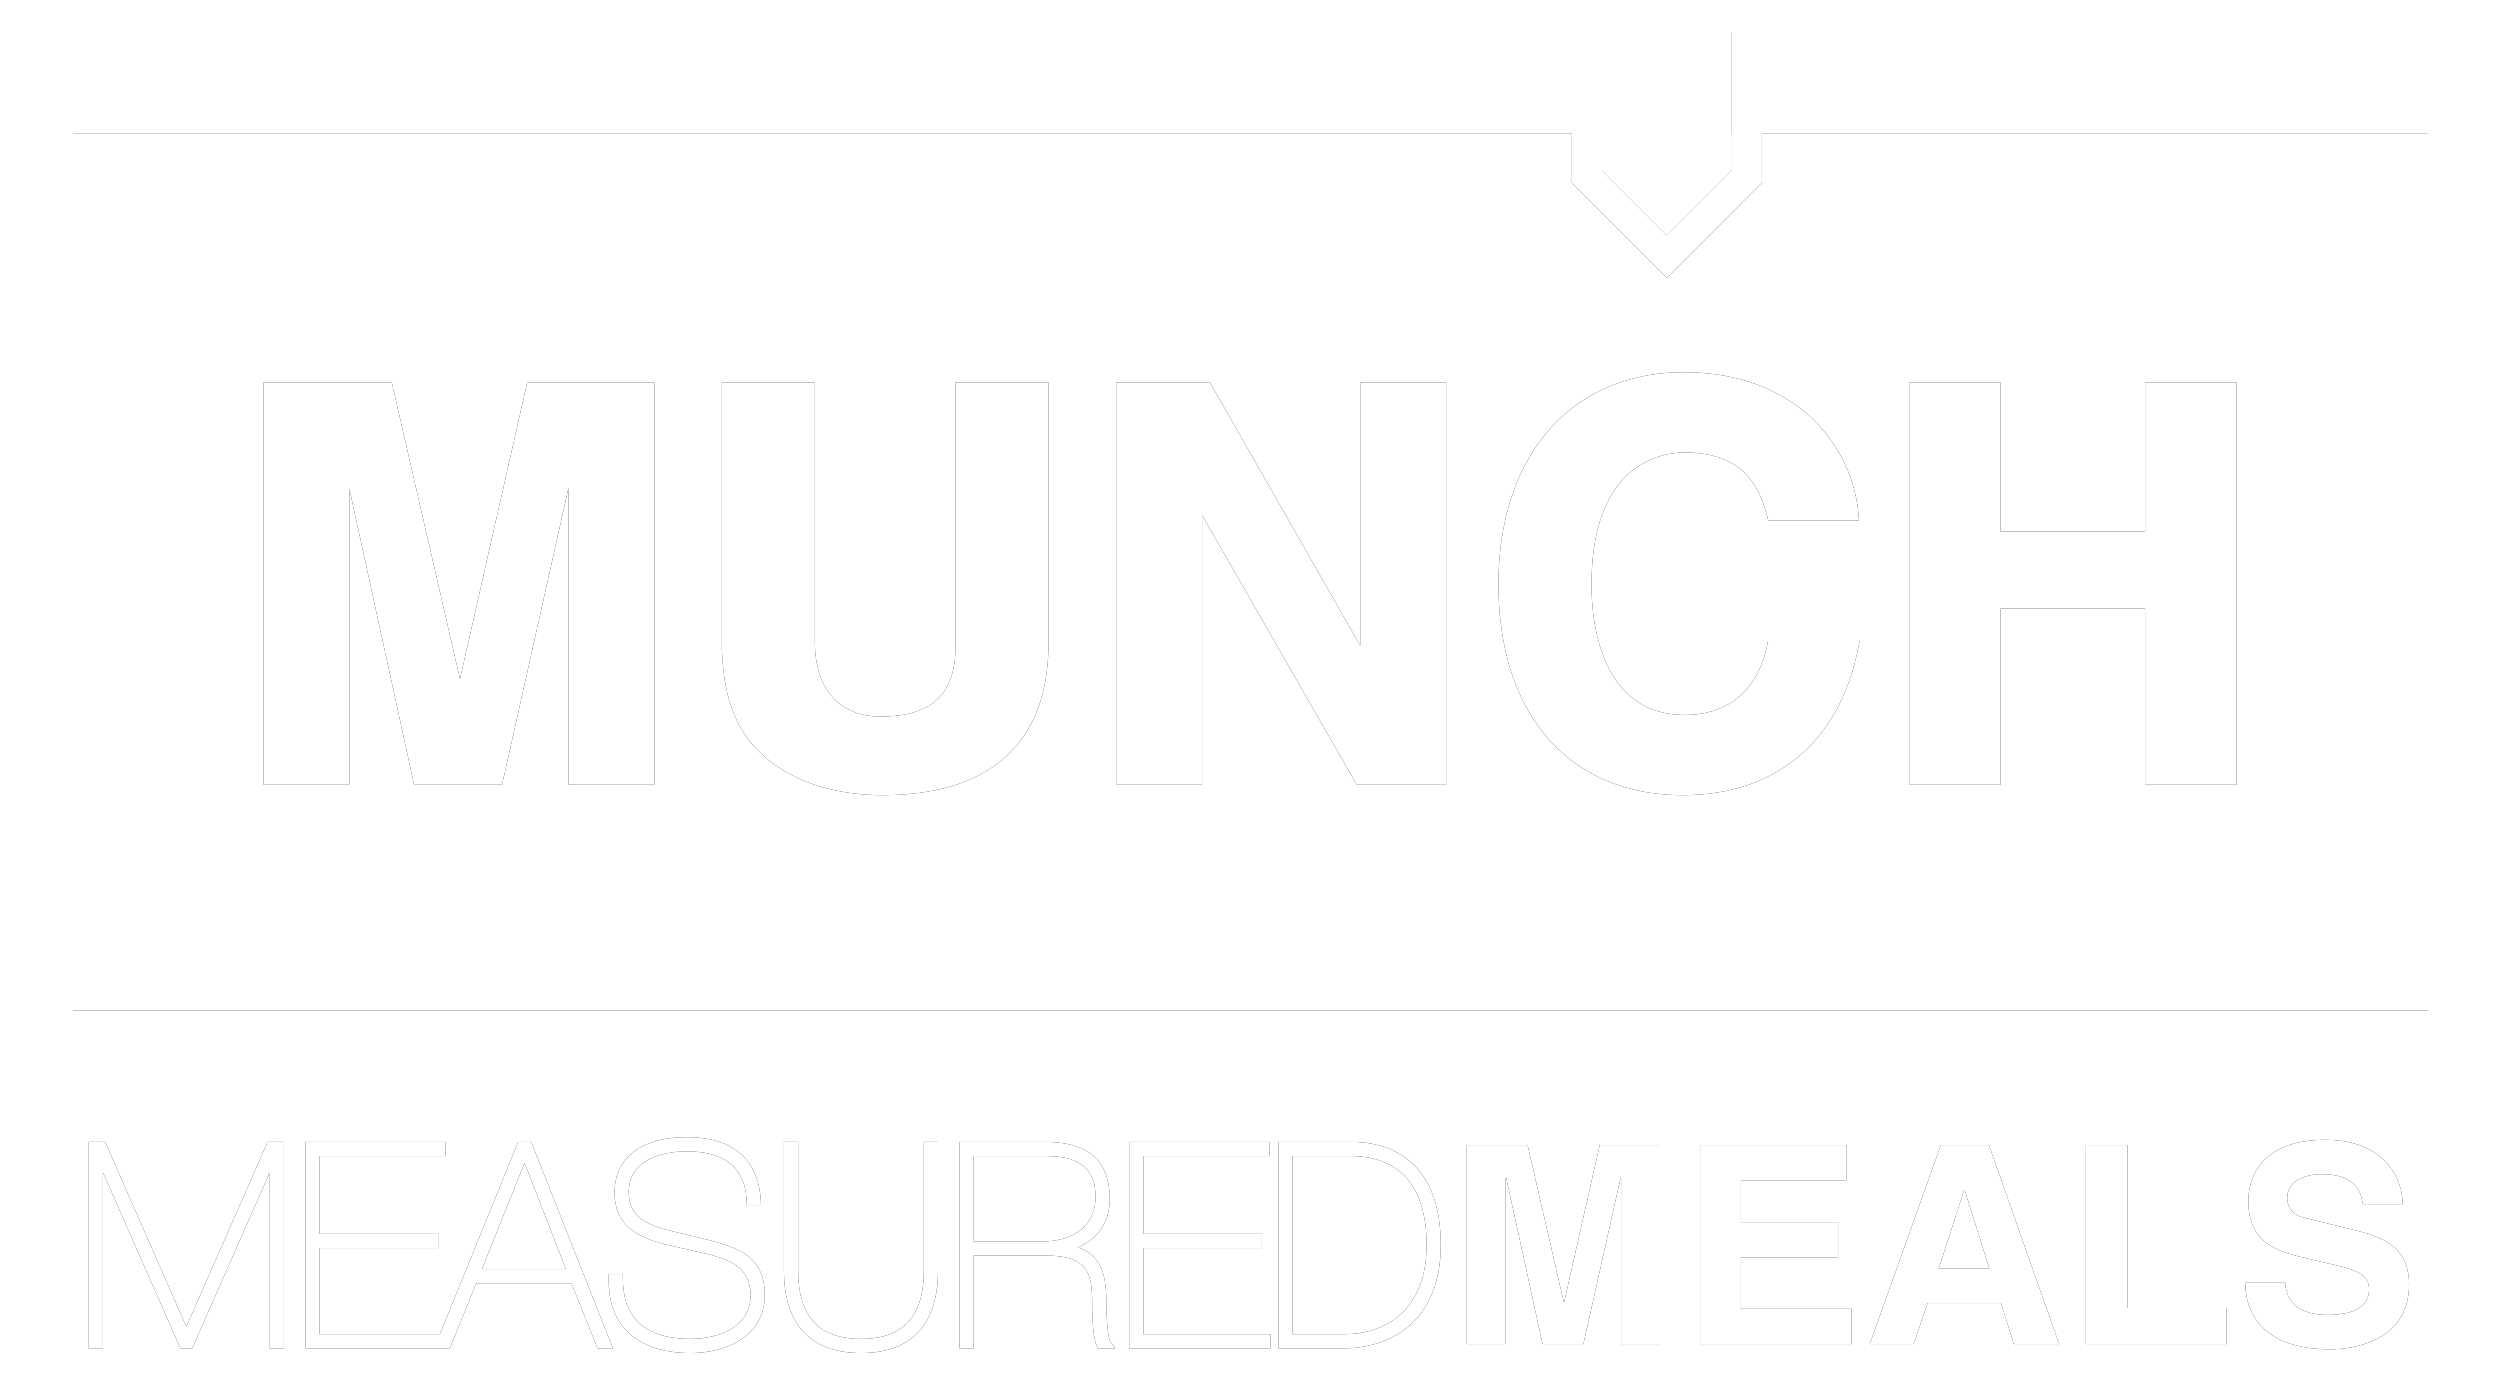 Munch Measured Meals